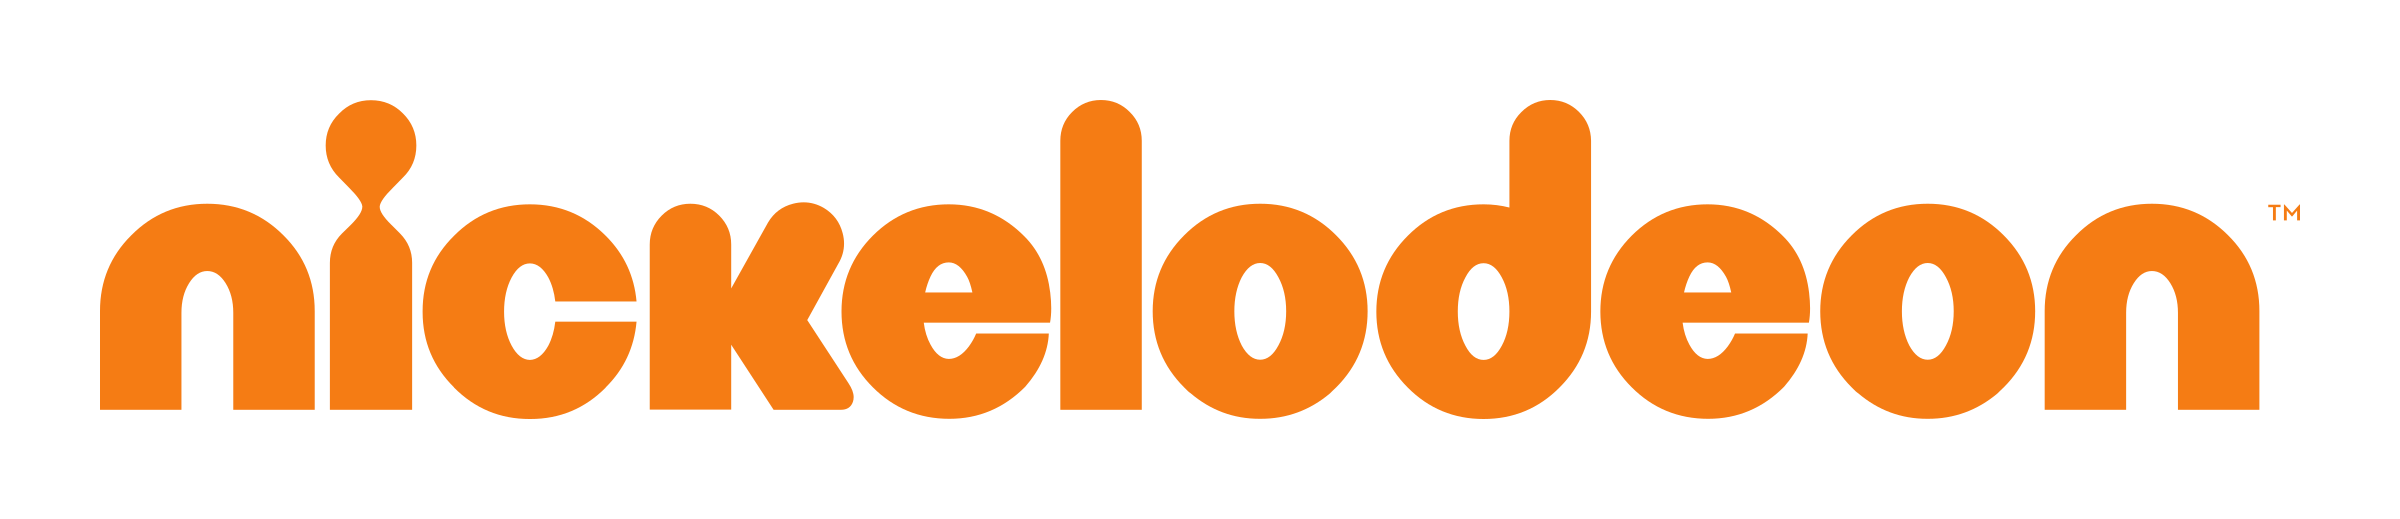 Nickelodeon Logo